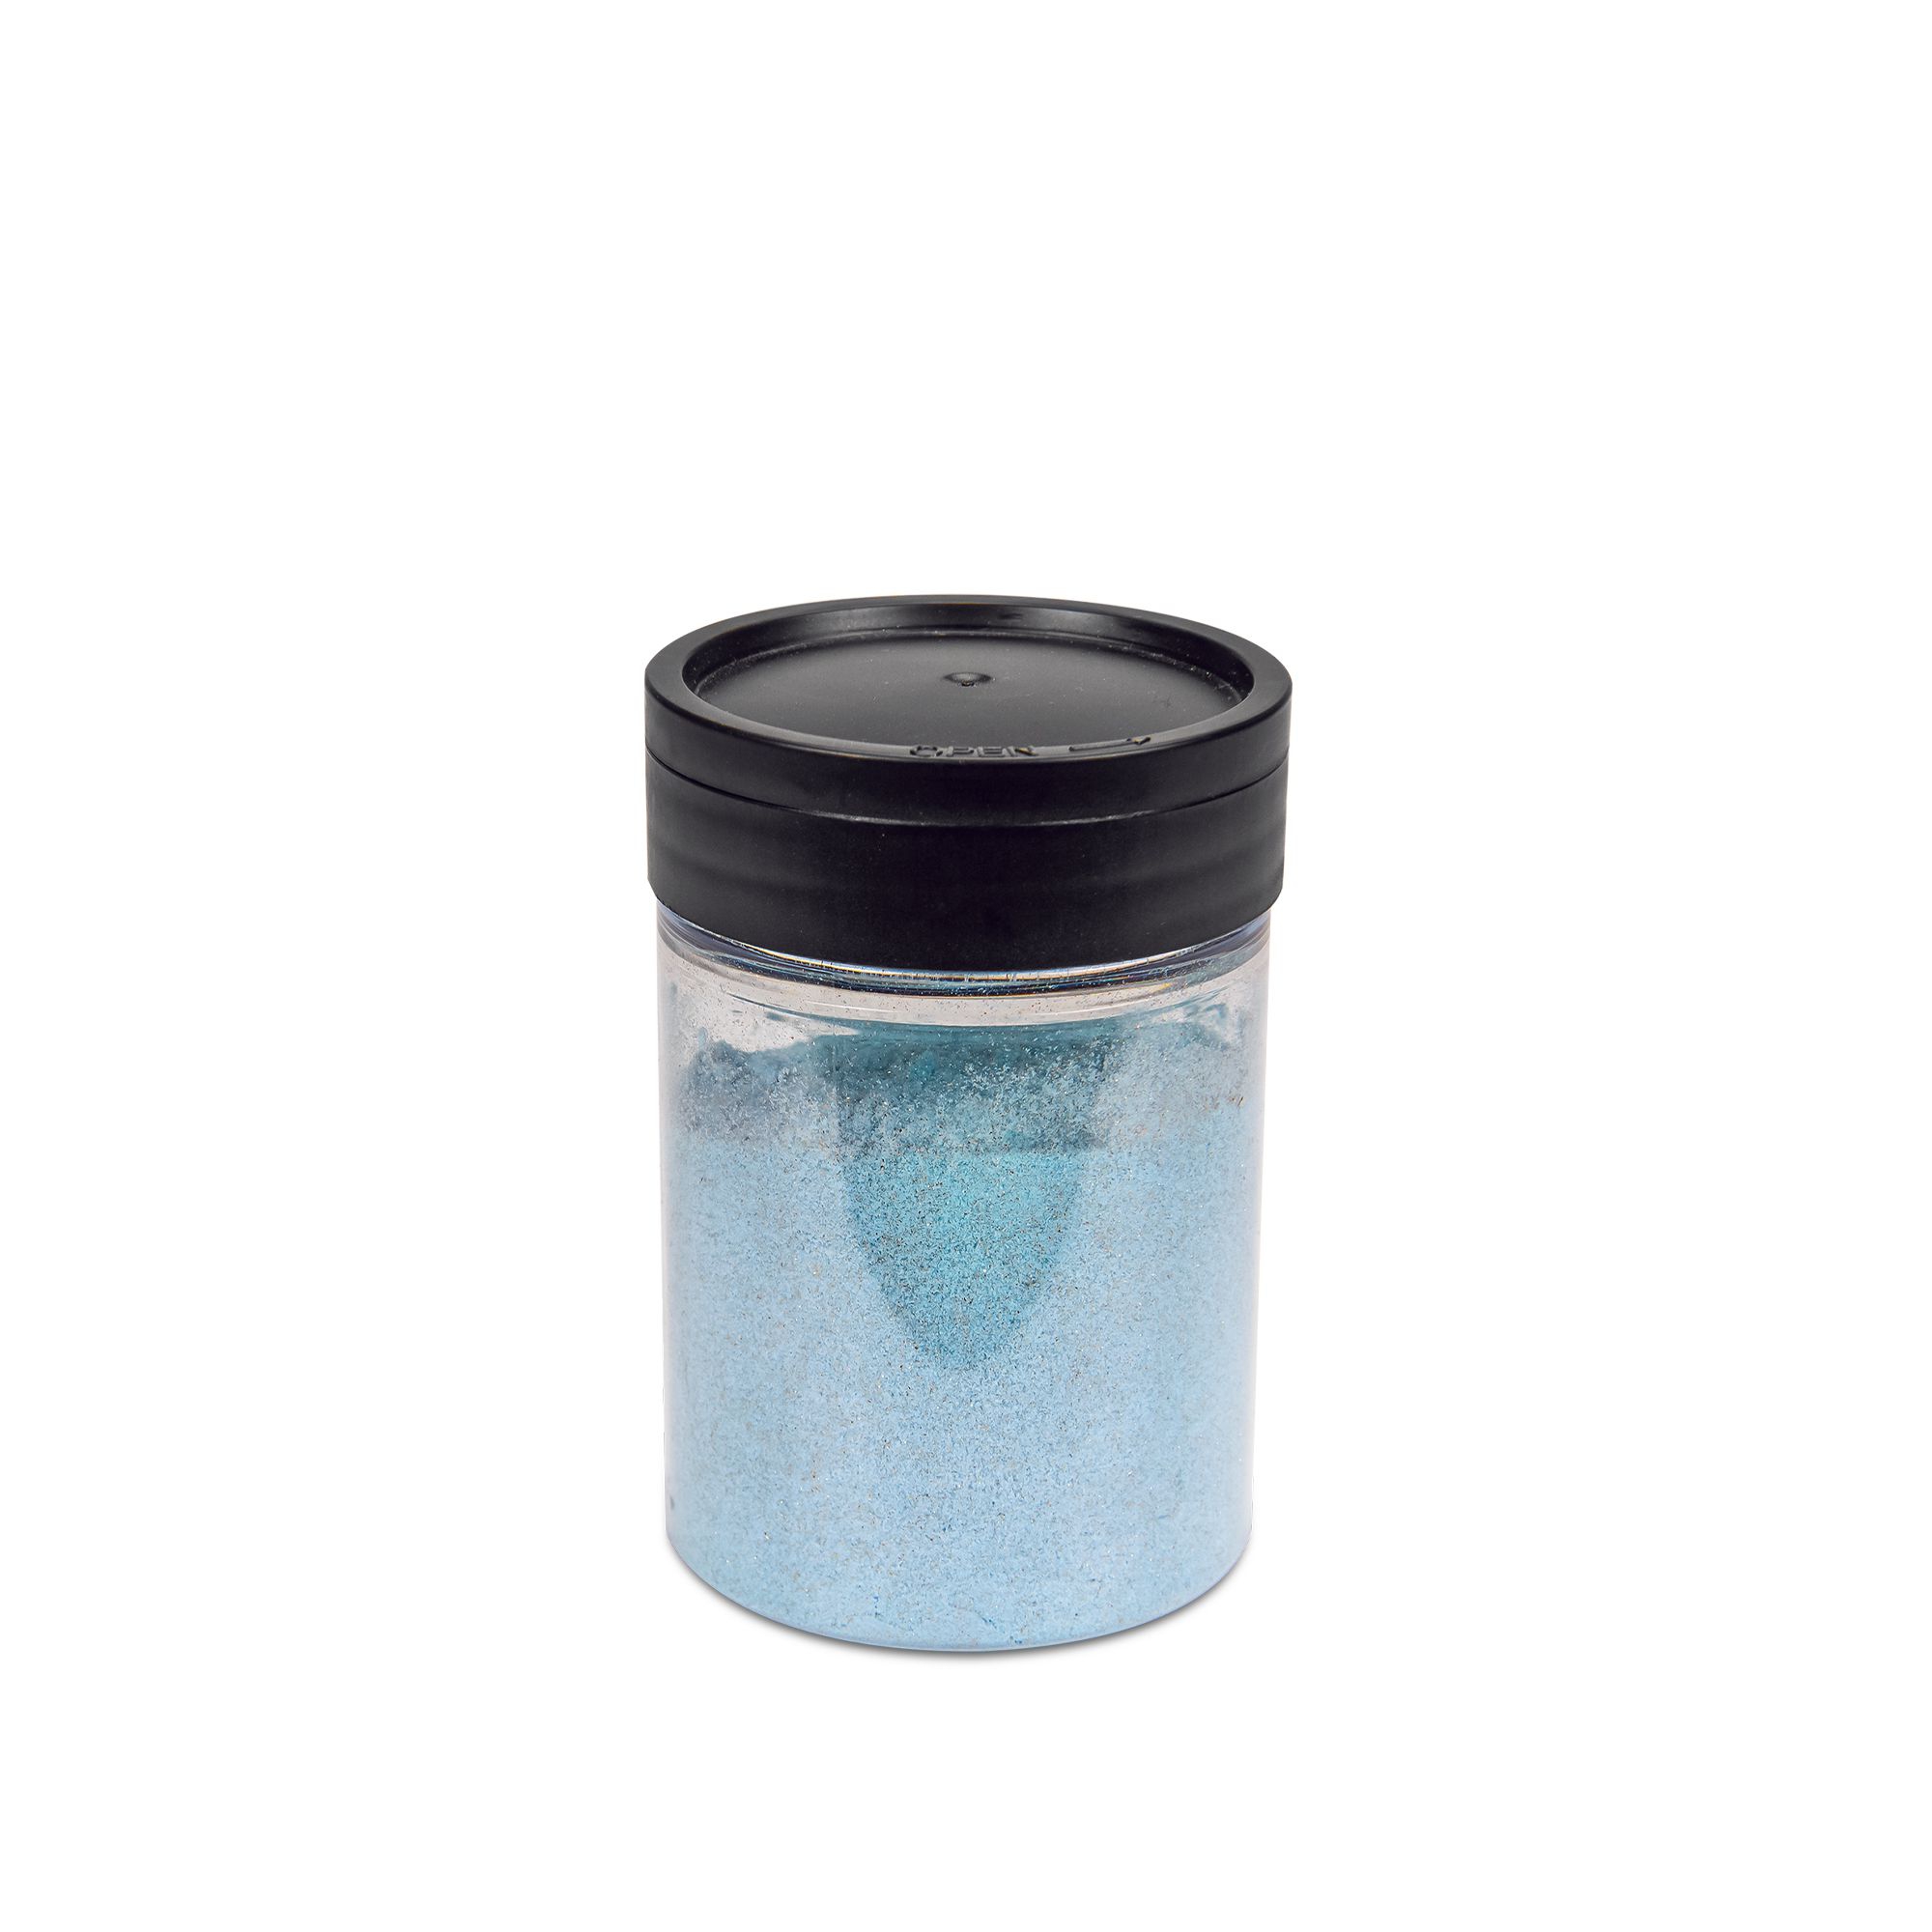 Städter - Eatable sprinkle decor Diamond DustPowder blue(50g)